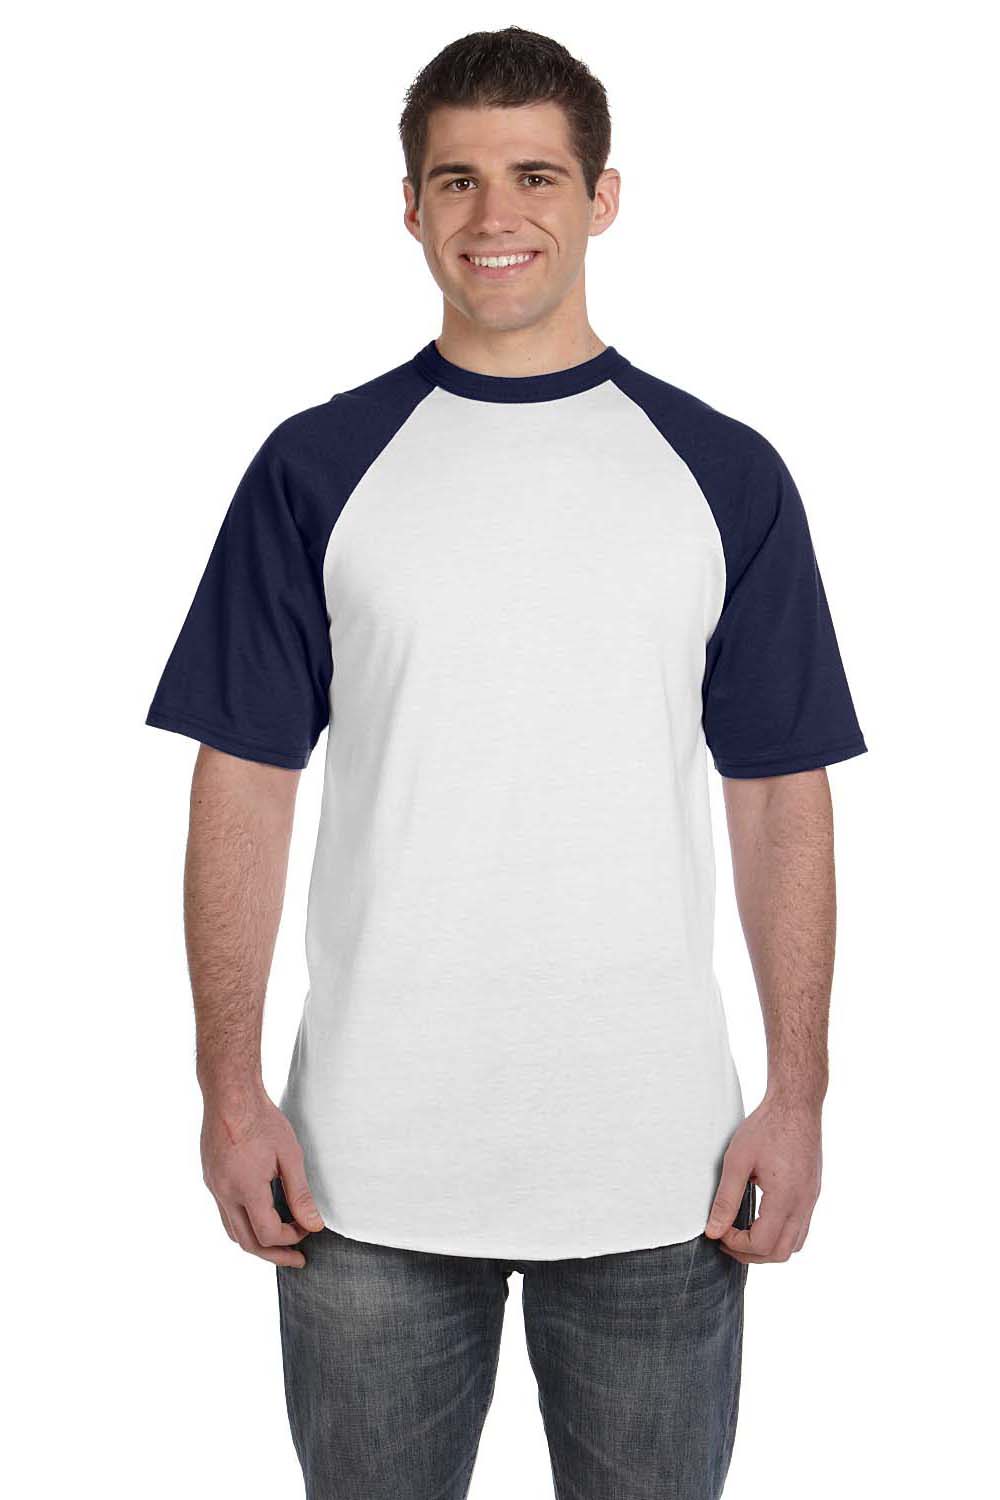 Augusta Sportswear 423 Mens Short Sleeve Crewneck T-Shirt White/Navy Blue Model Front